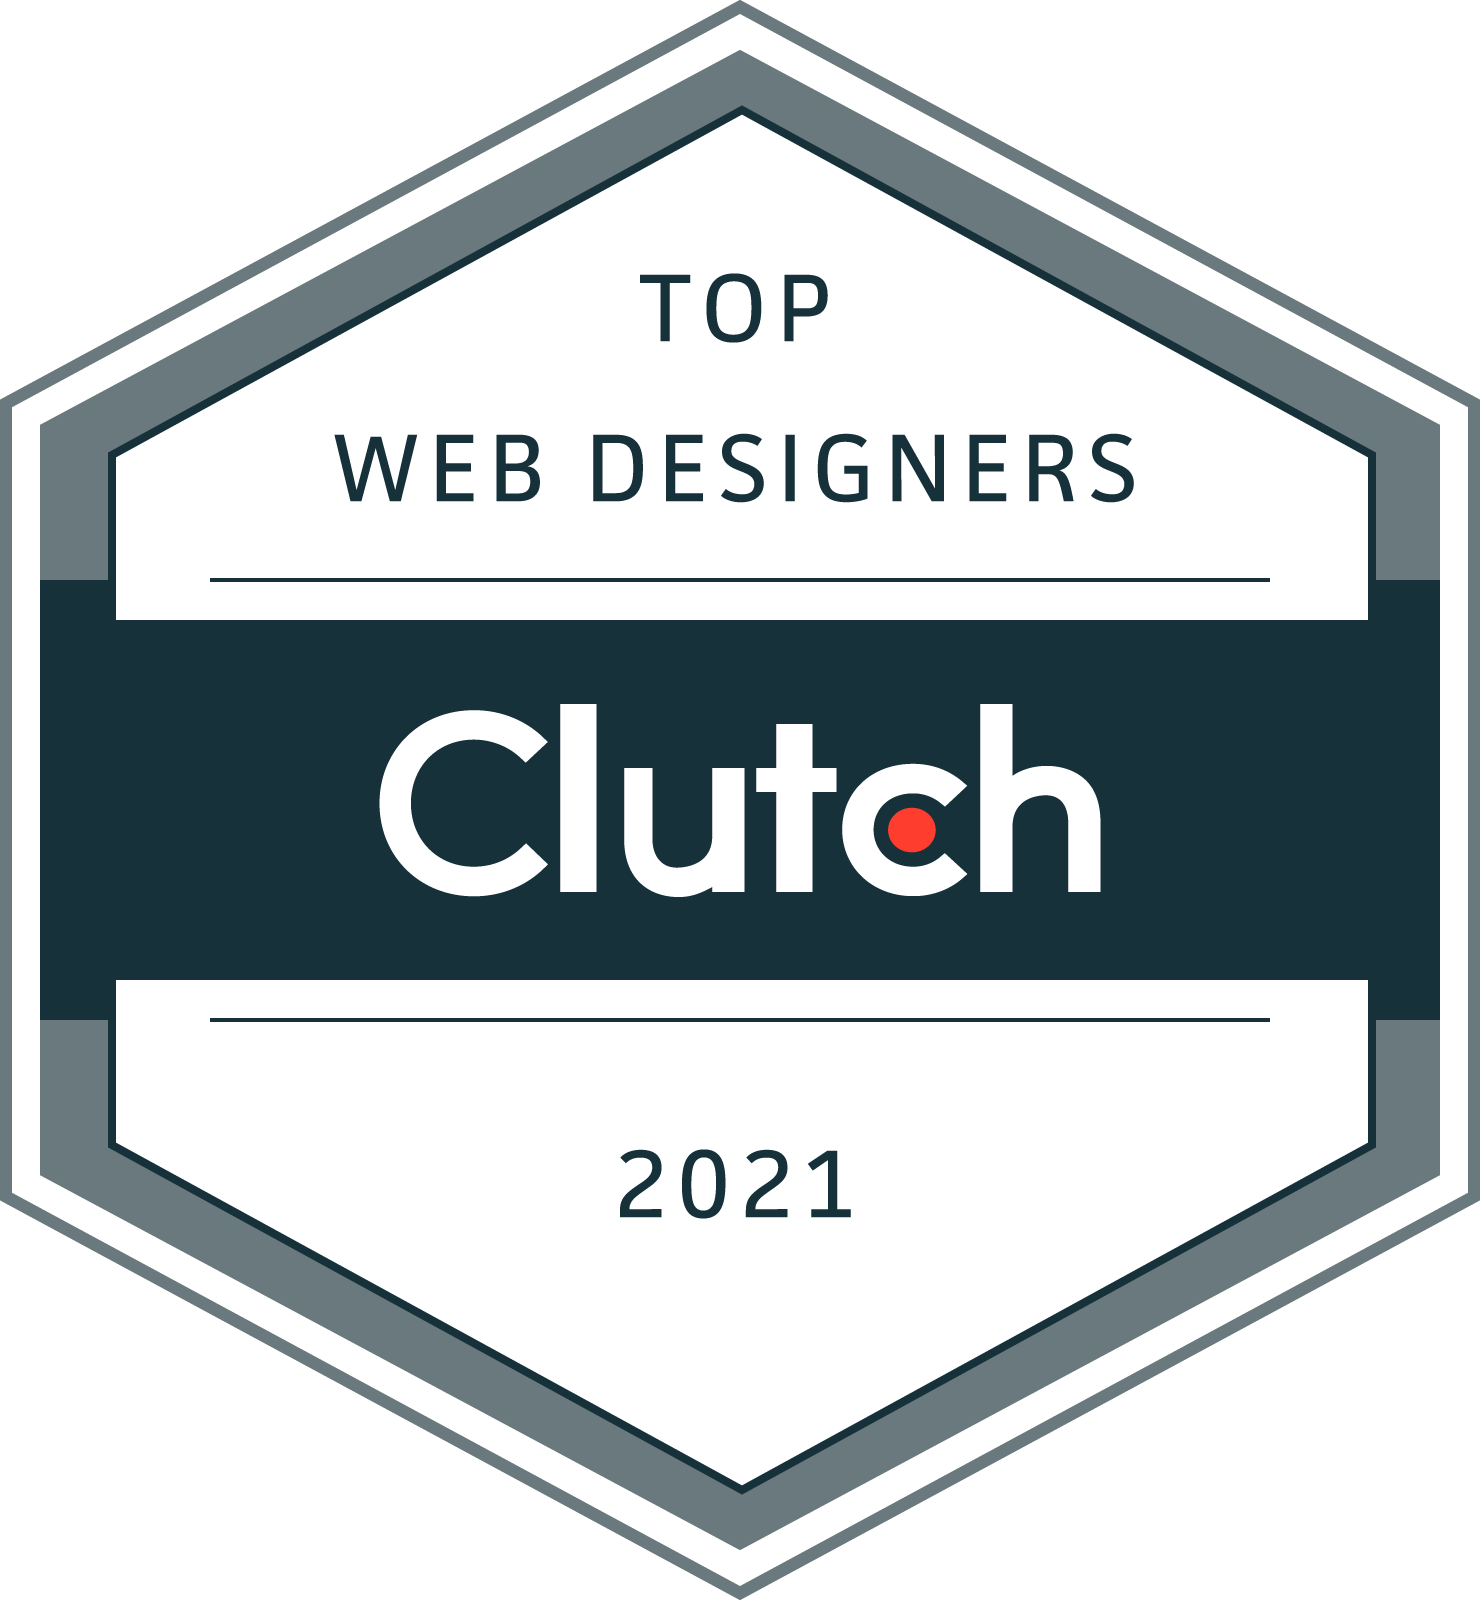 Canada’s Best Web Design Agency Award